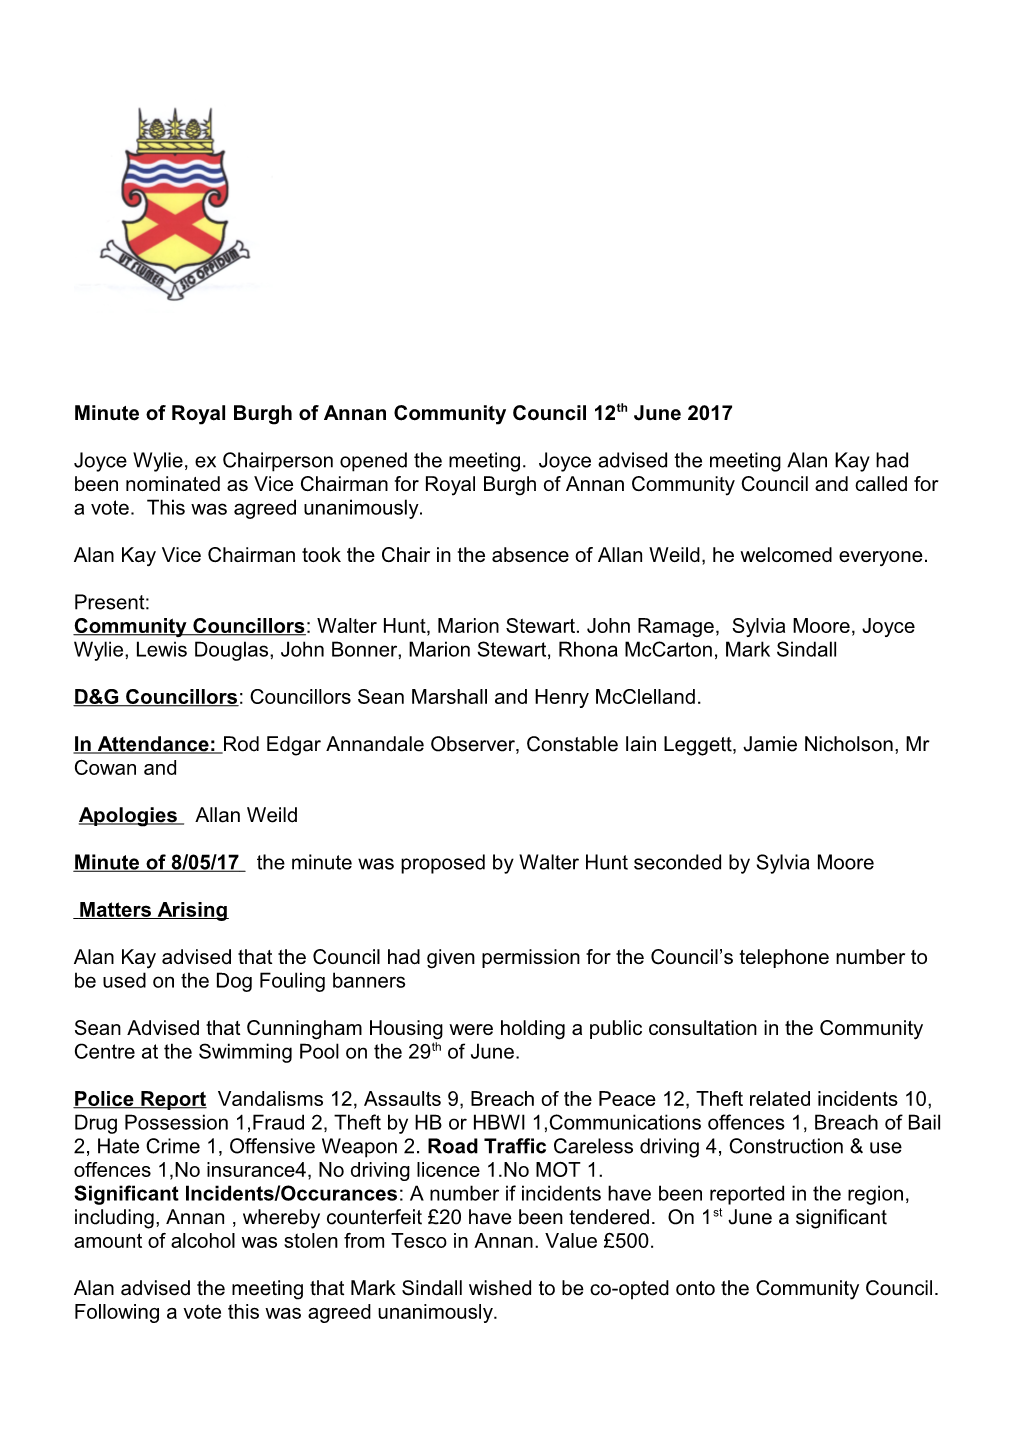 The Royal Burgh of Annan Community Council